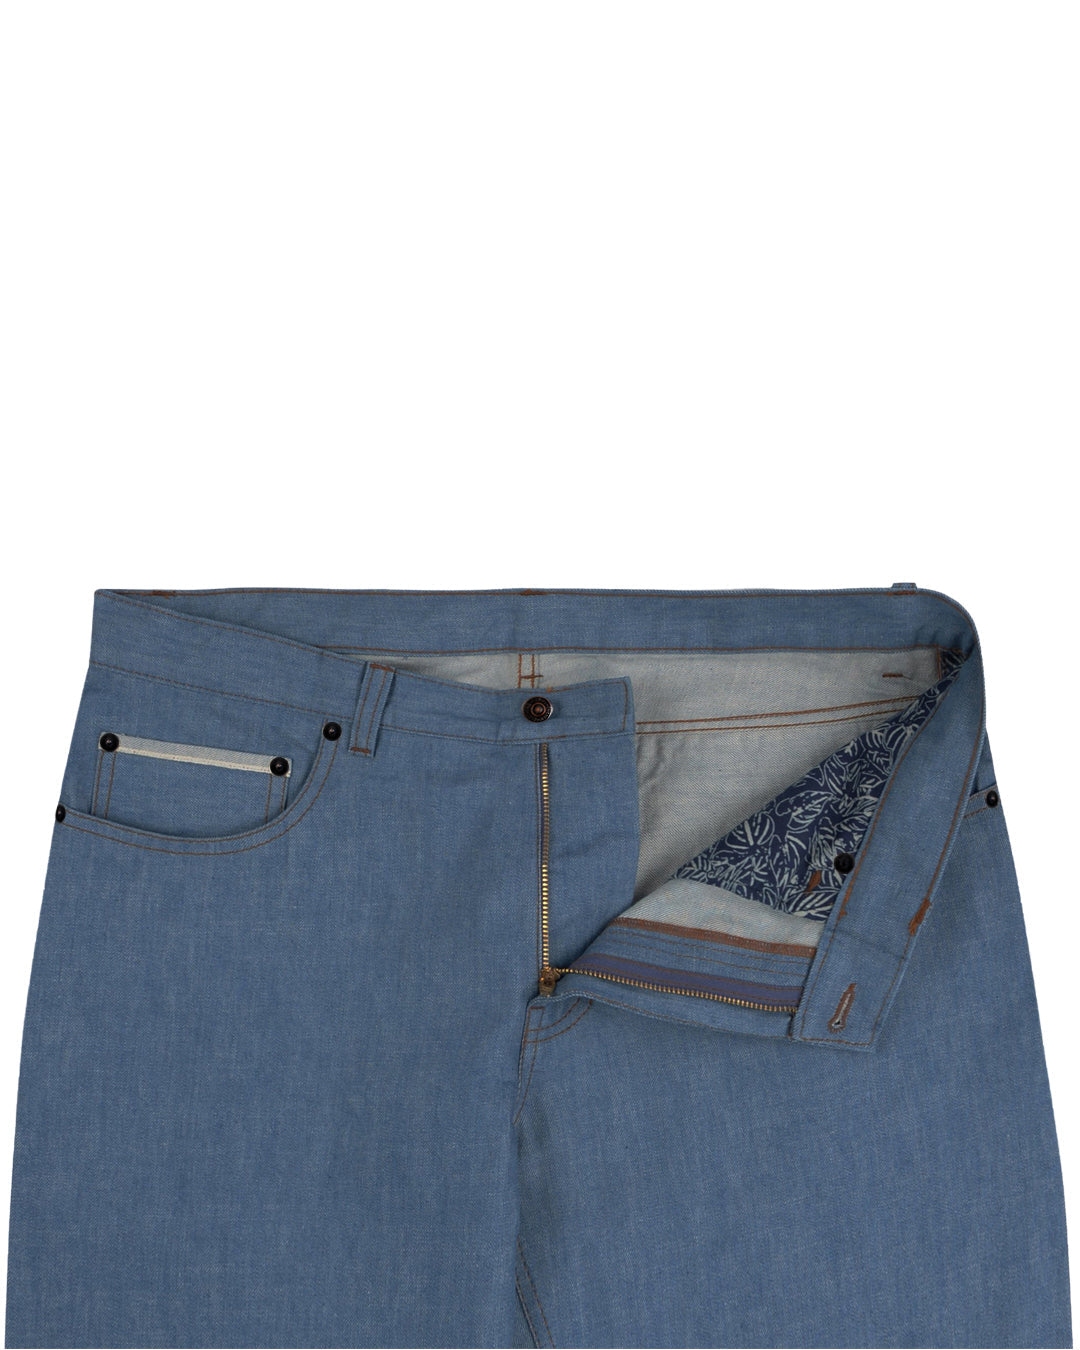 Front opwn view of custom broken slub jeans for men by Luxire in light blue